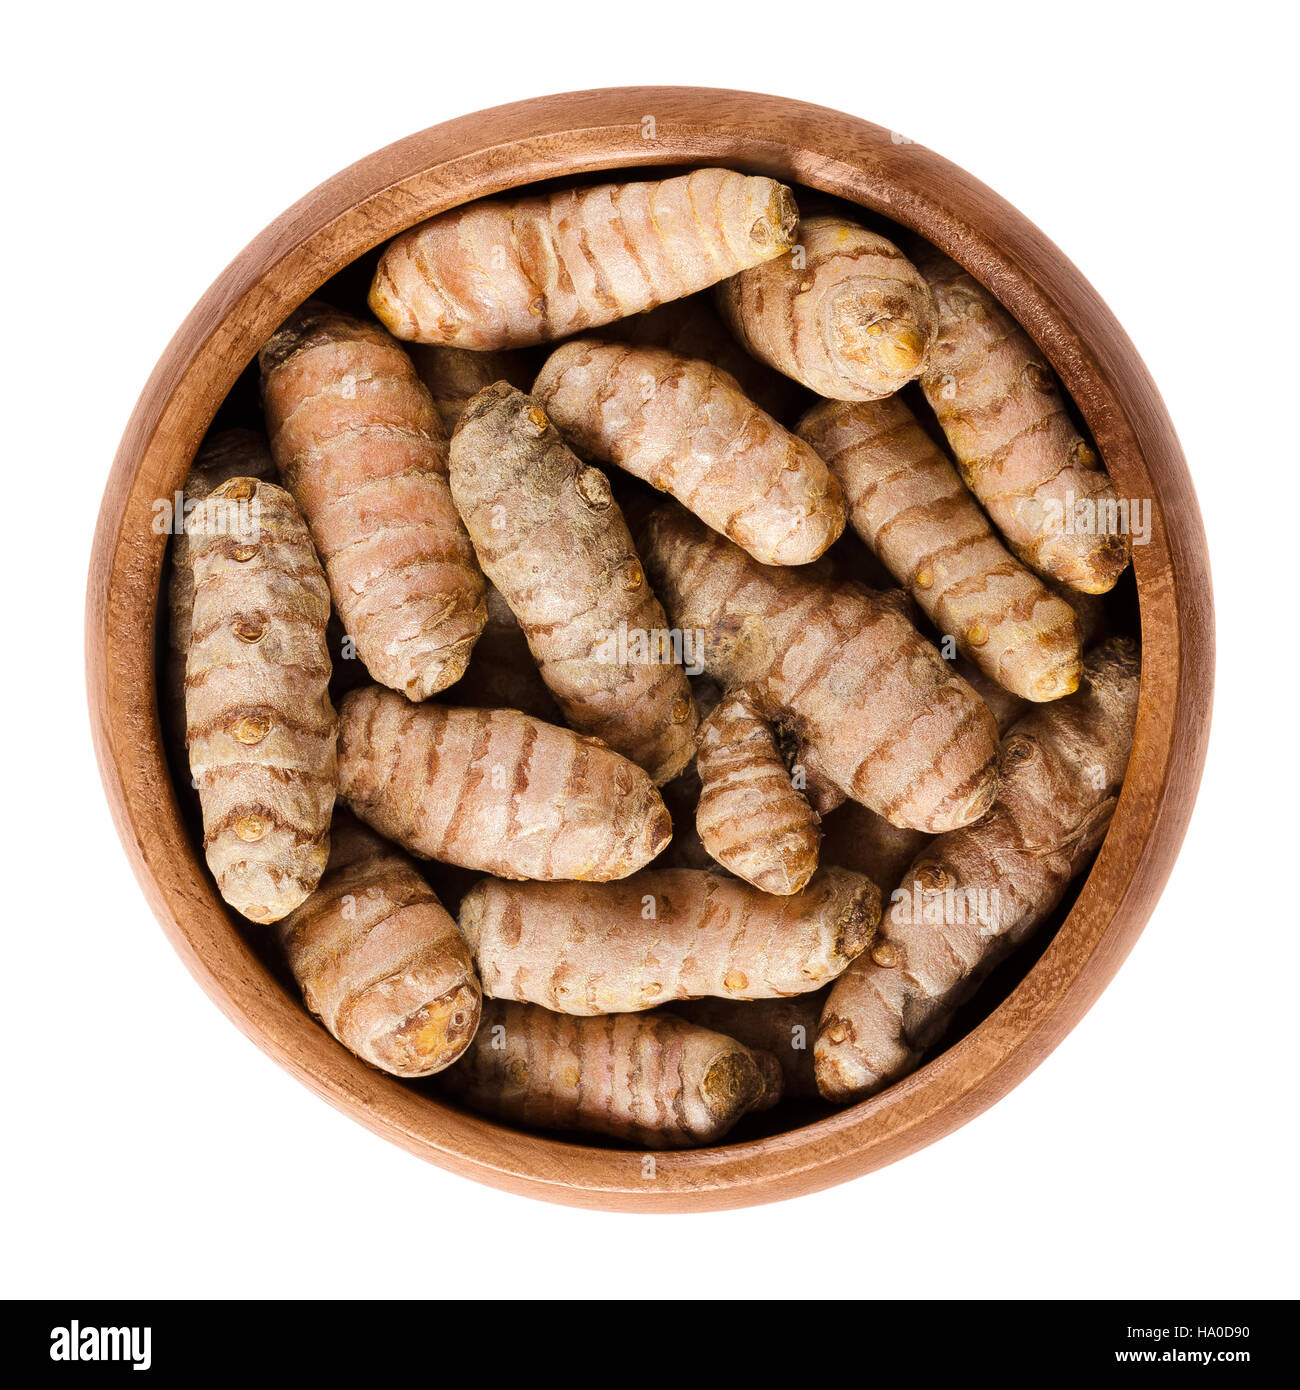 Frische Curcuma Rhizome in Holzschale. Curcuma Longa, auch Kurkuma, Curry, Senf und Medizin als Gewürz dienen. Stockfoto